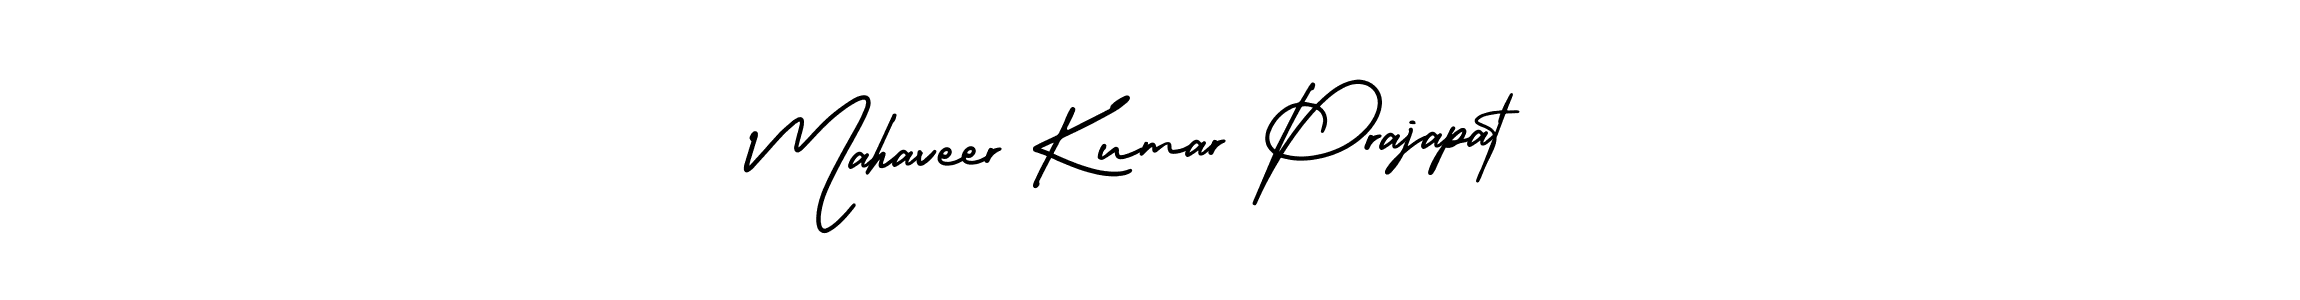 Best and Professional Signature Style for Mahaveer Kumar Prajapat. AmerikaSignatureDemo-Regular Best Signature Style Collection. Mahaveer Kumar Prajapat signature style 3 images and pictures png